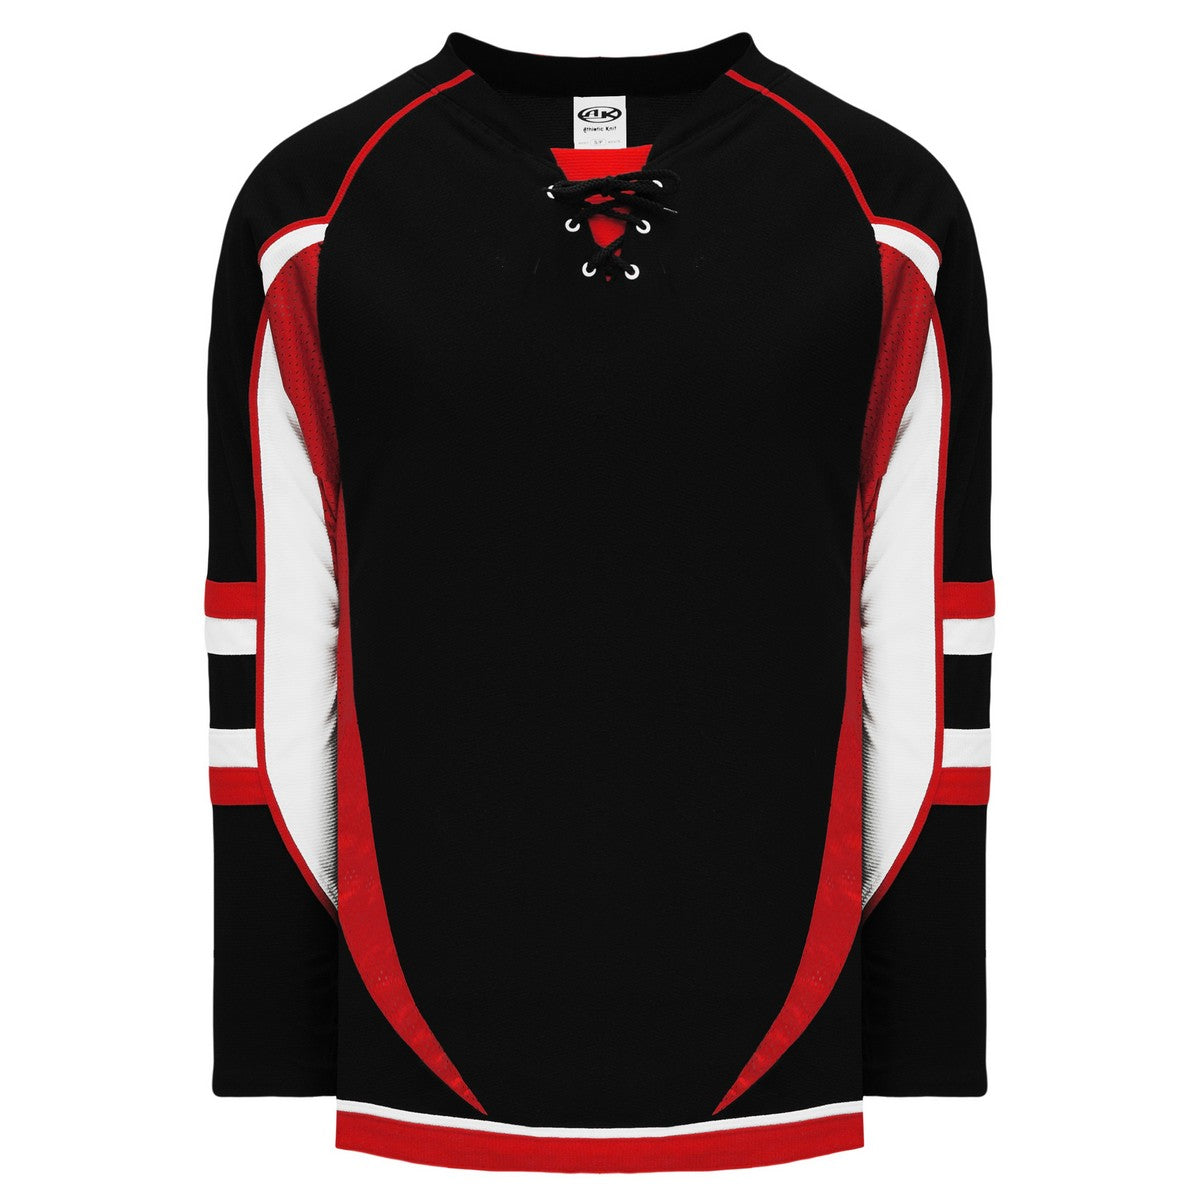 Replica Premier style Ottawa Senators Black Hockey Jersey